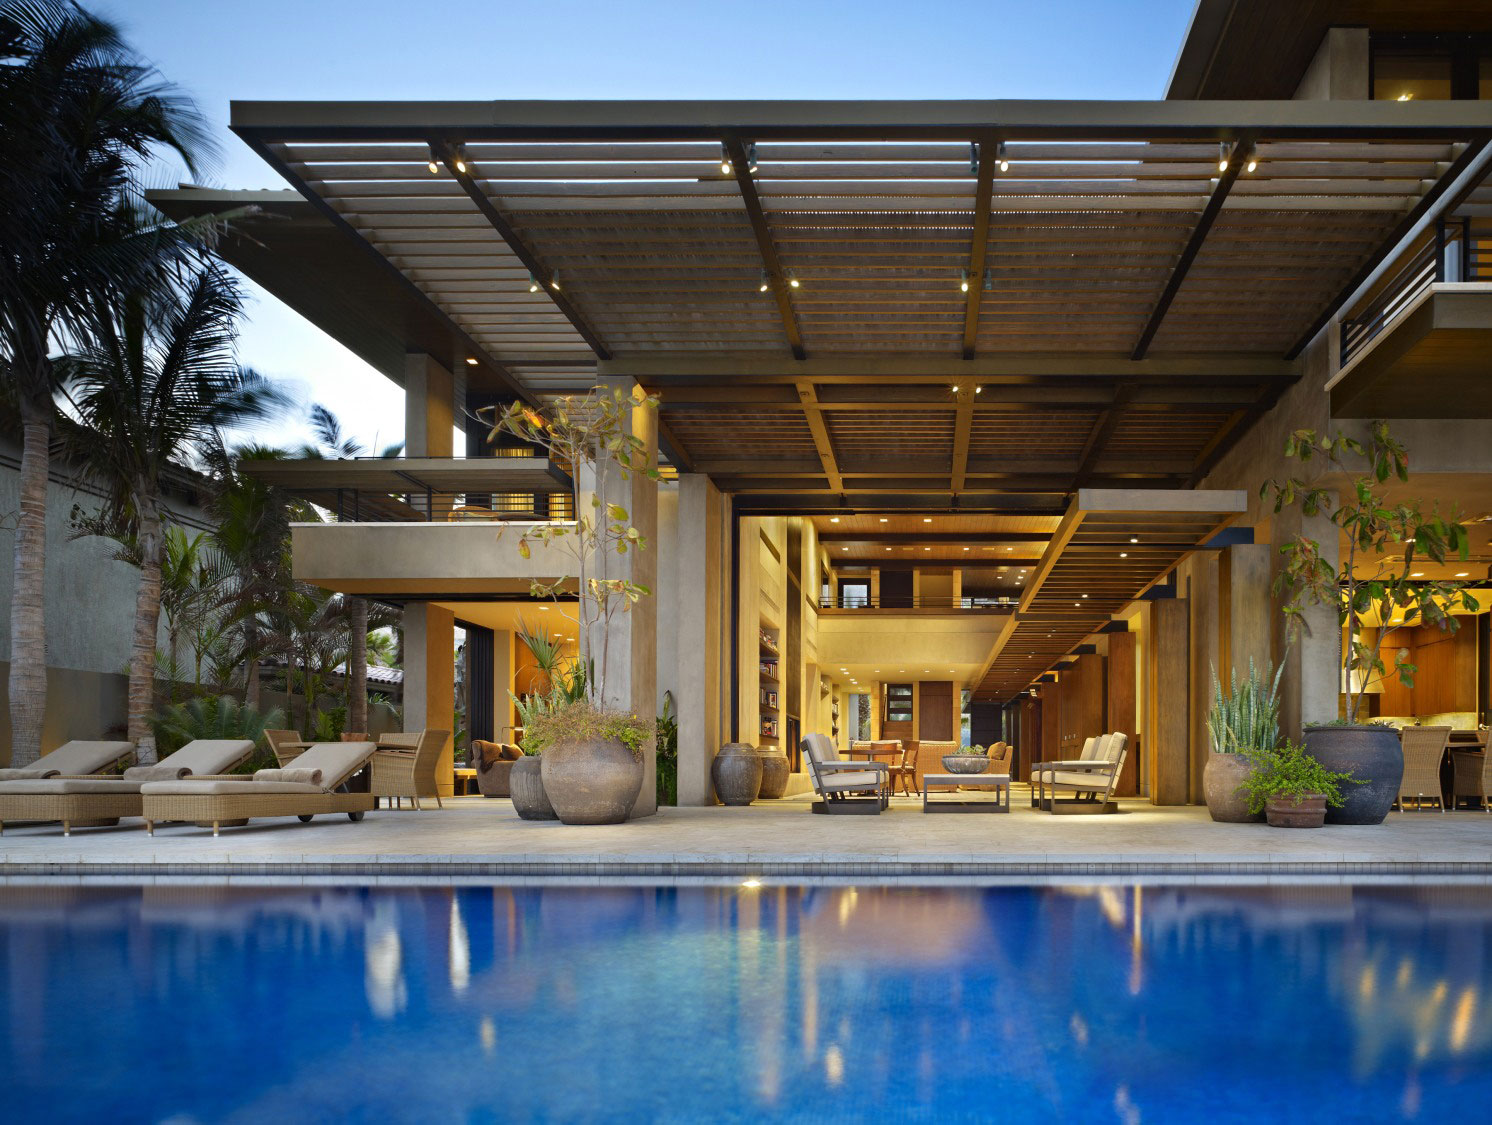 Pool, Terrace, Beachfront Home in Cabo San Lucas, Mexico